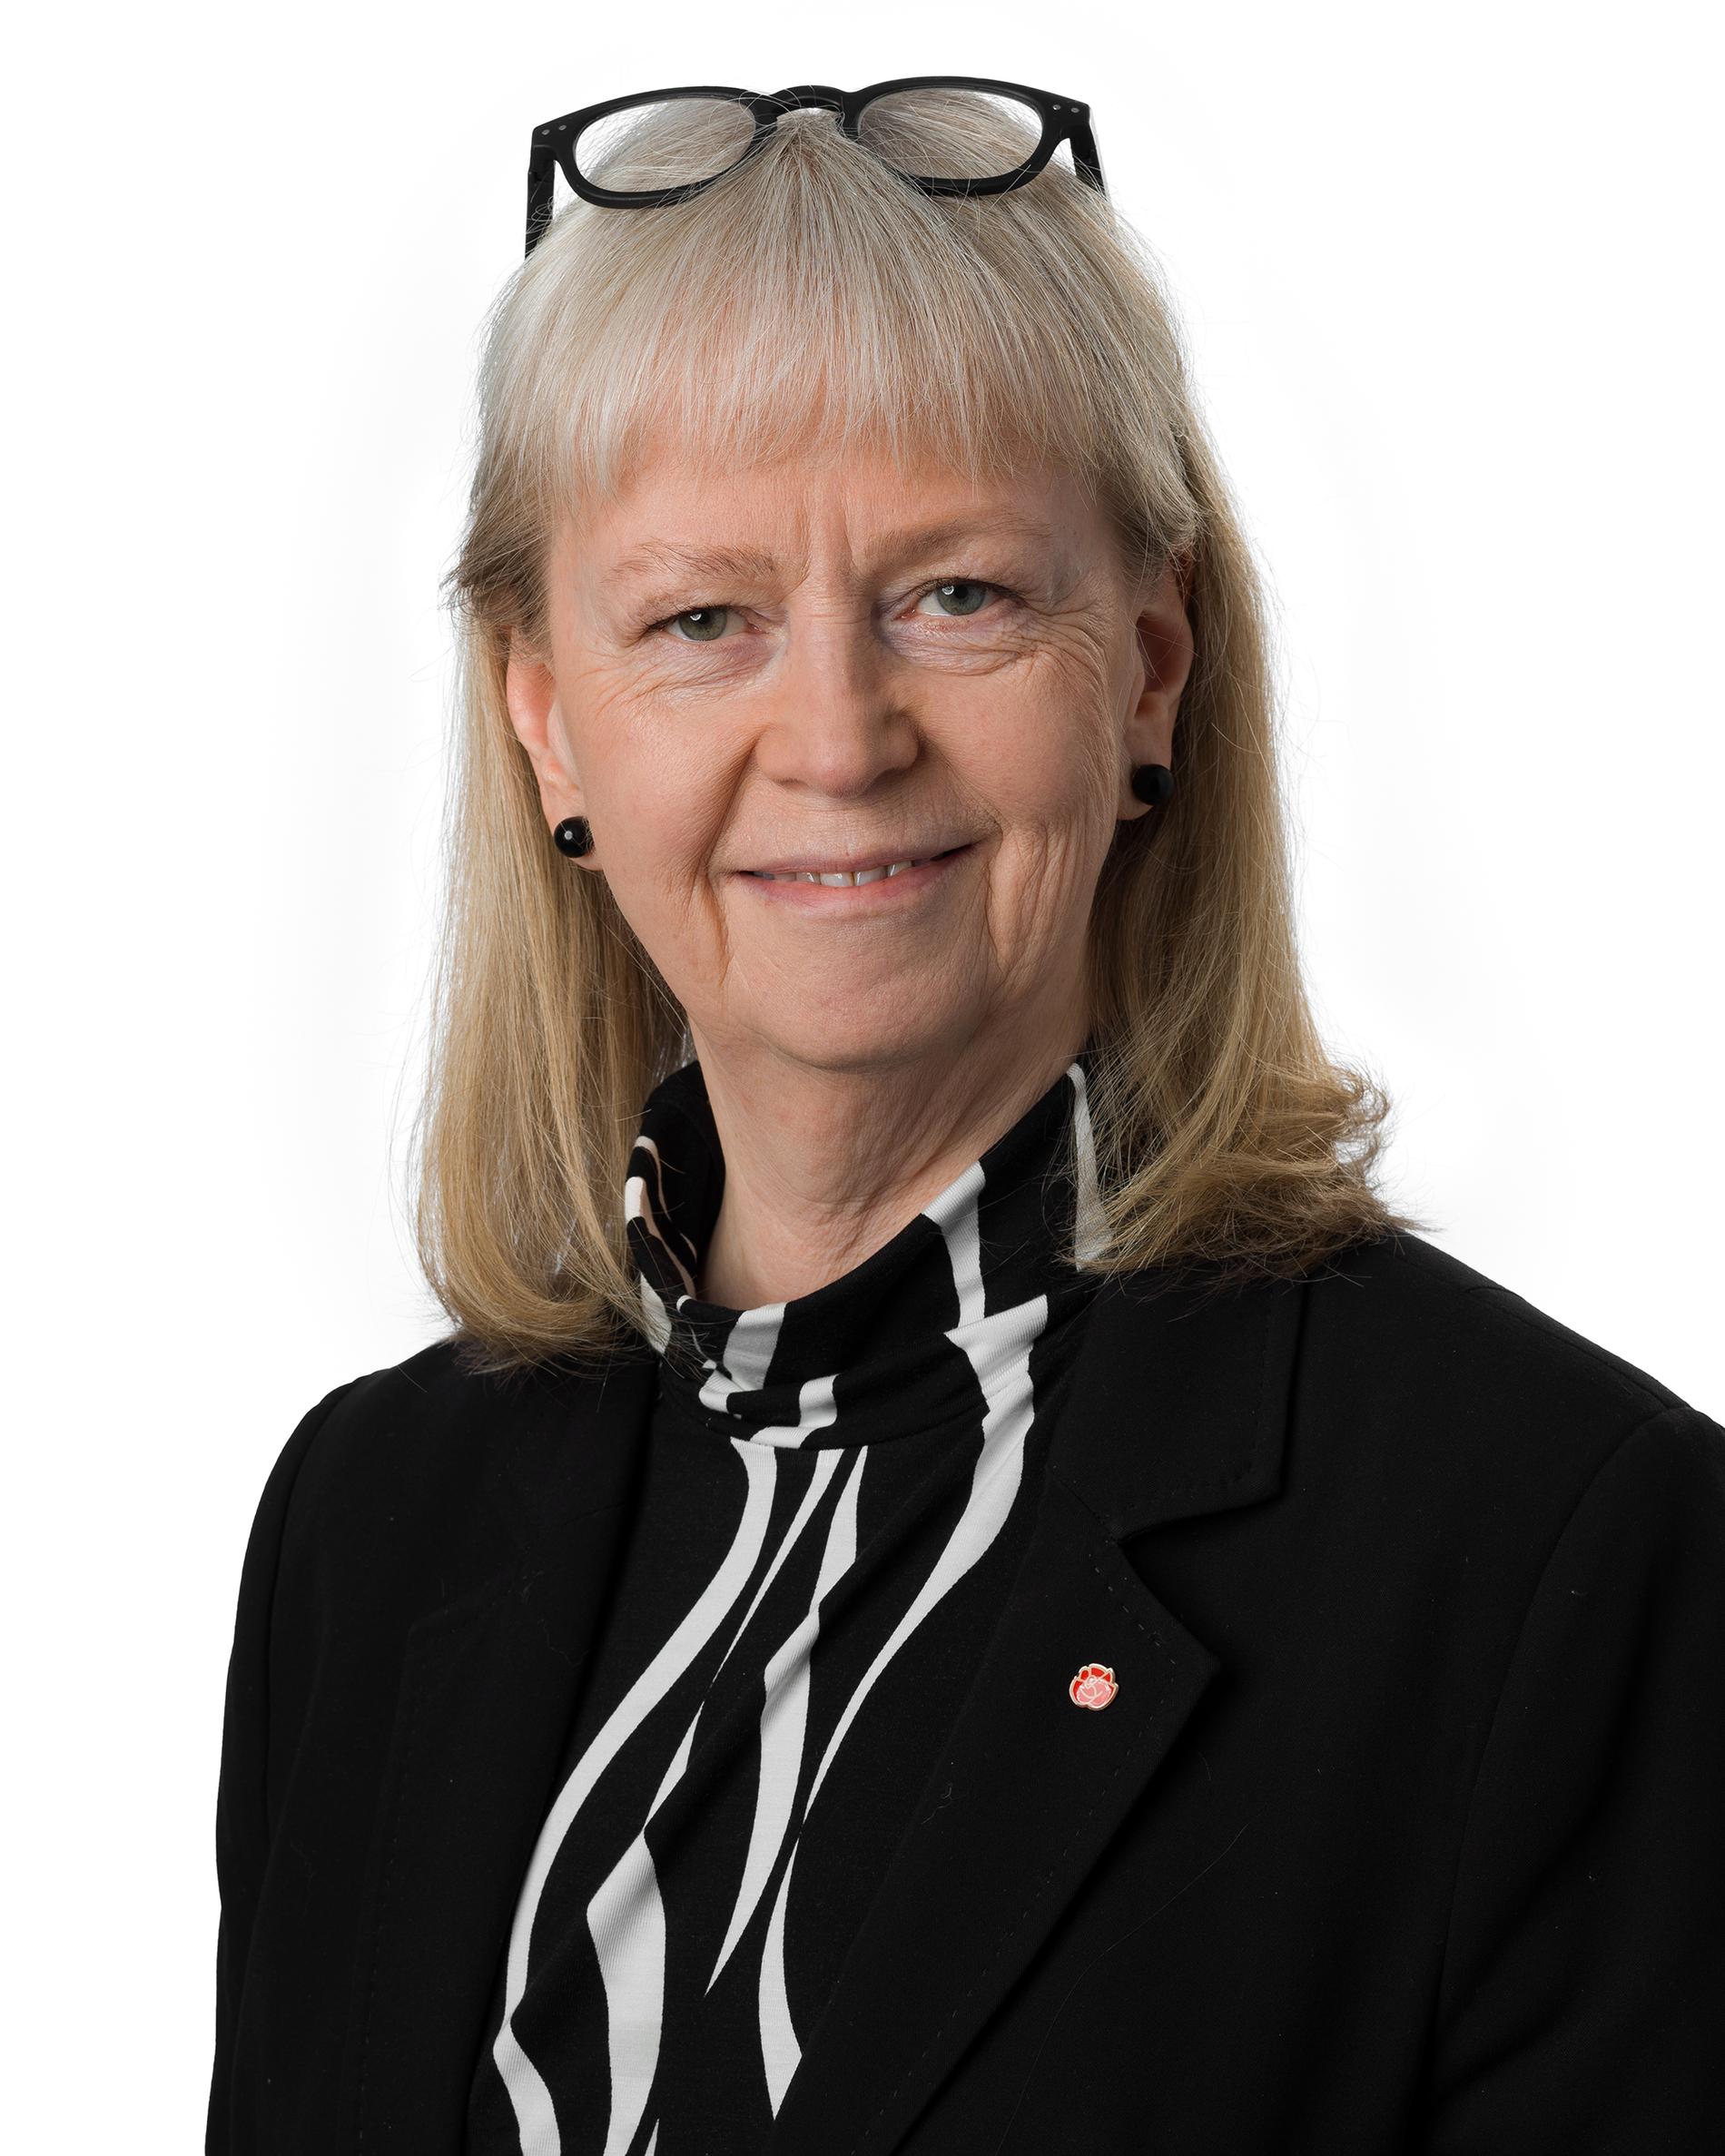 Cecilia Dalman Eek, styrelseordförande Sahlgrenska universitetssjukhuset. 